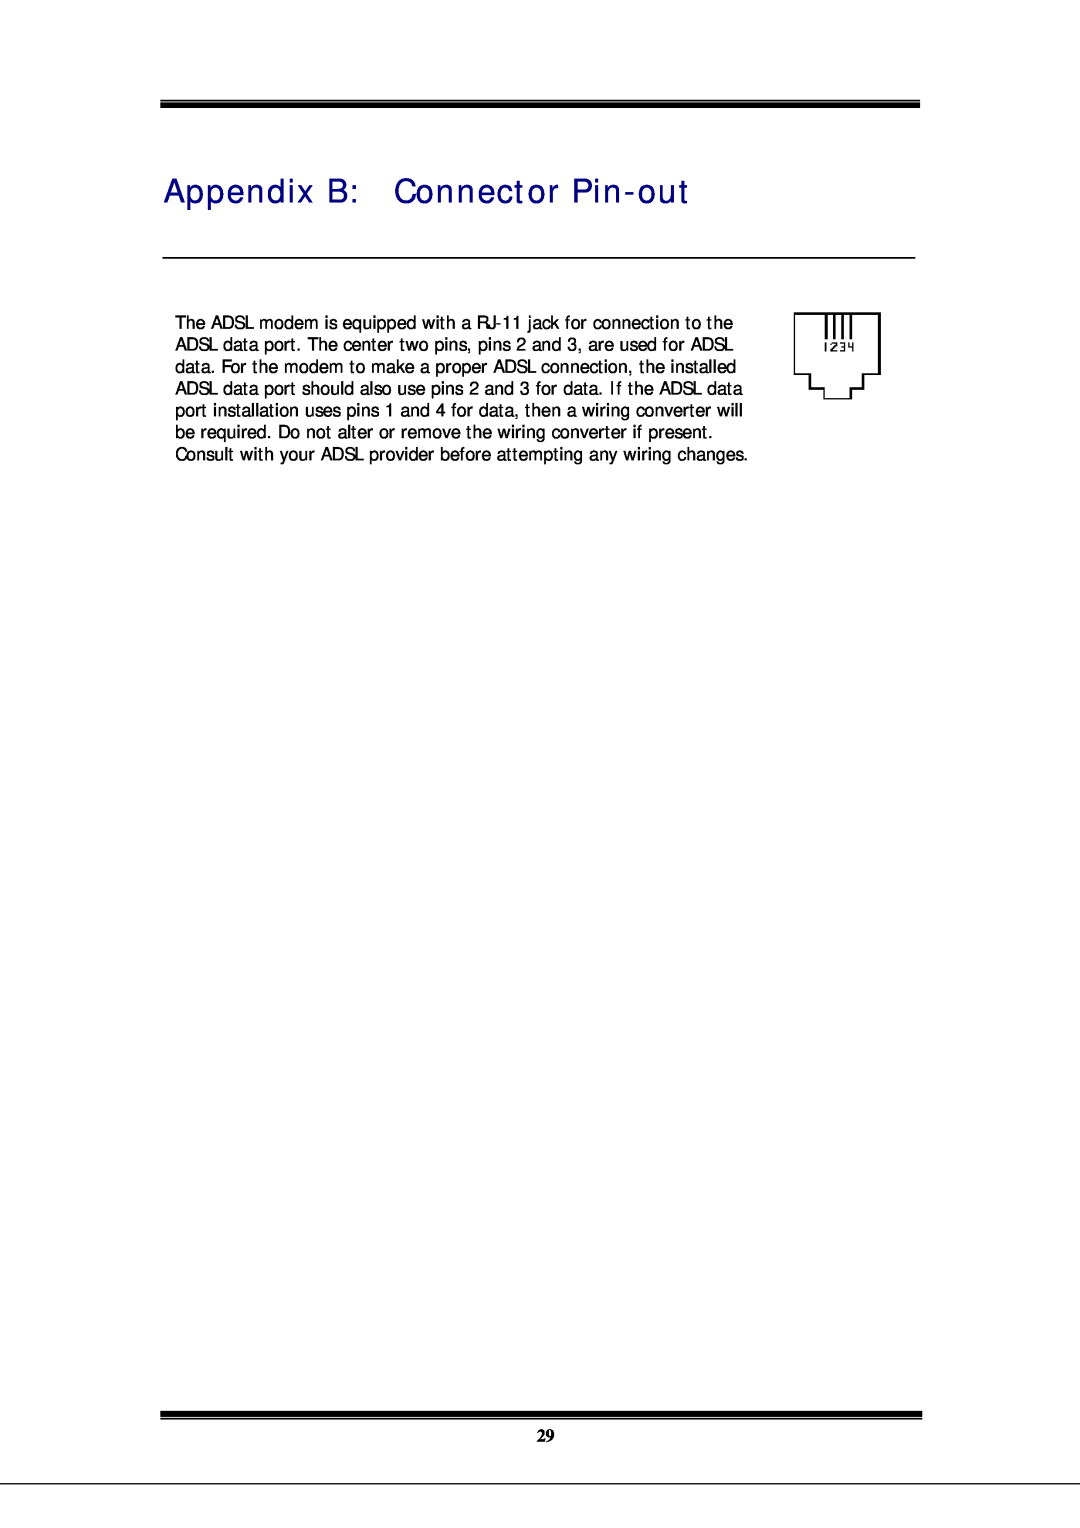 Microsoft EA900 manual Appendix B Connector Pin-out 